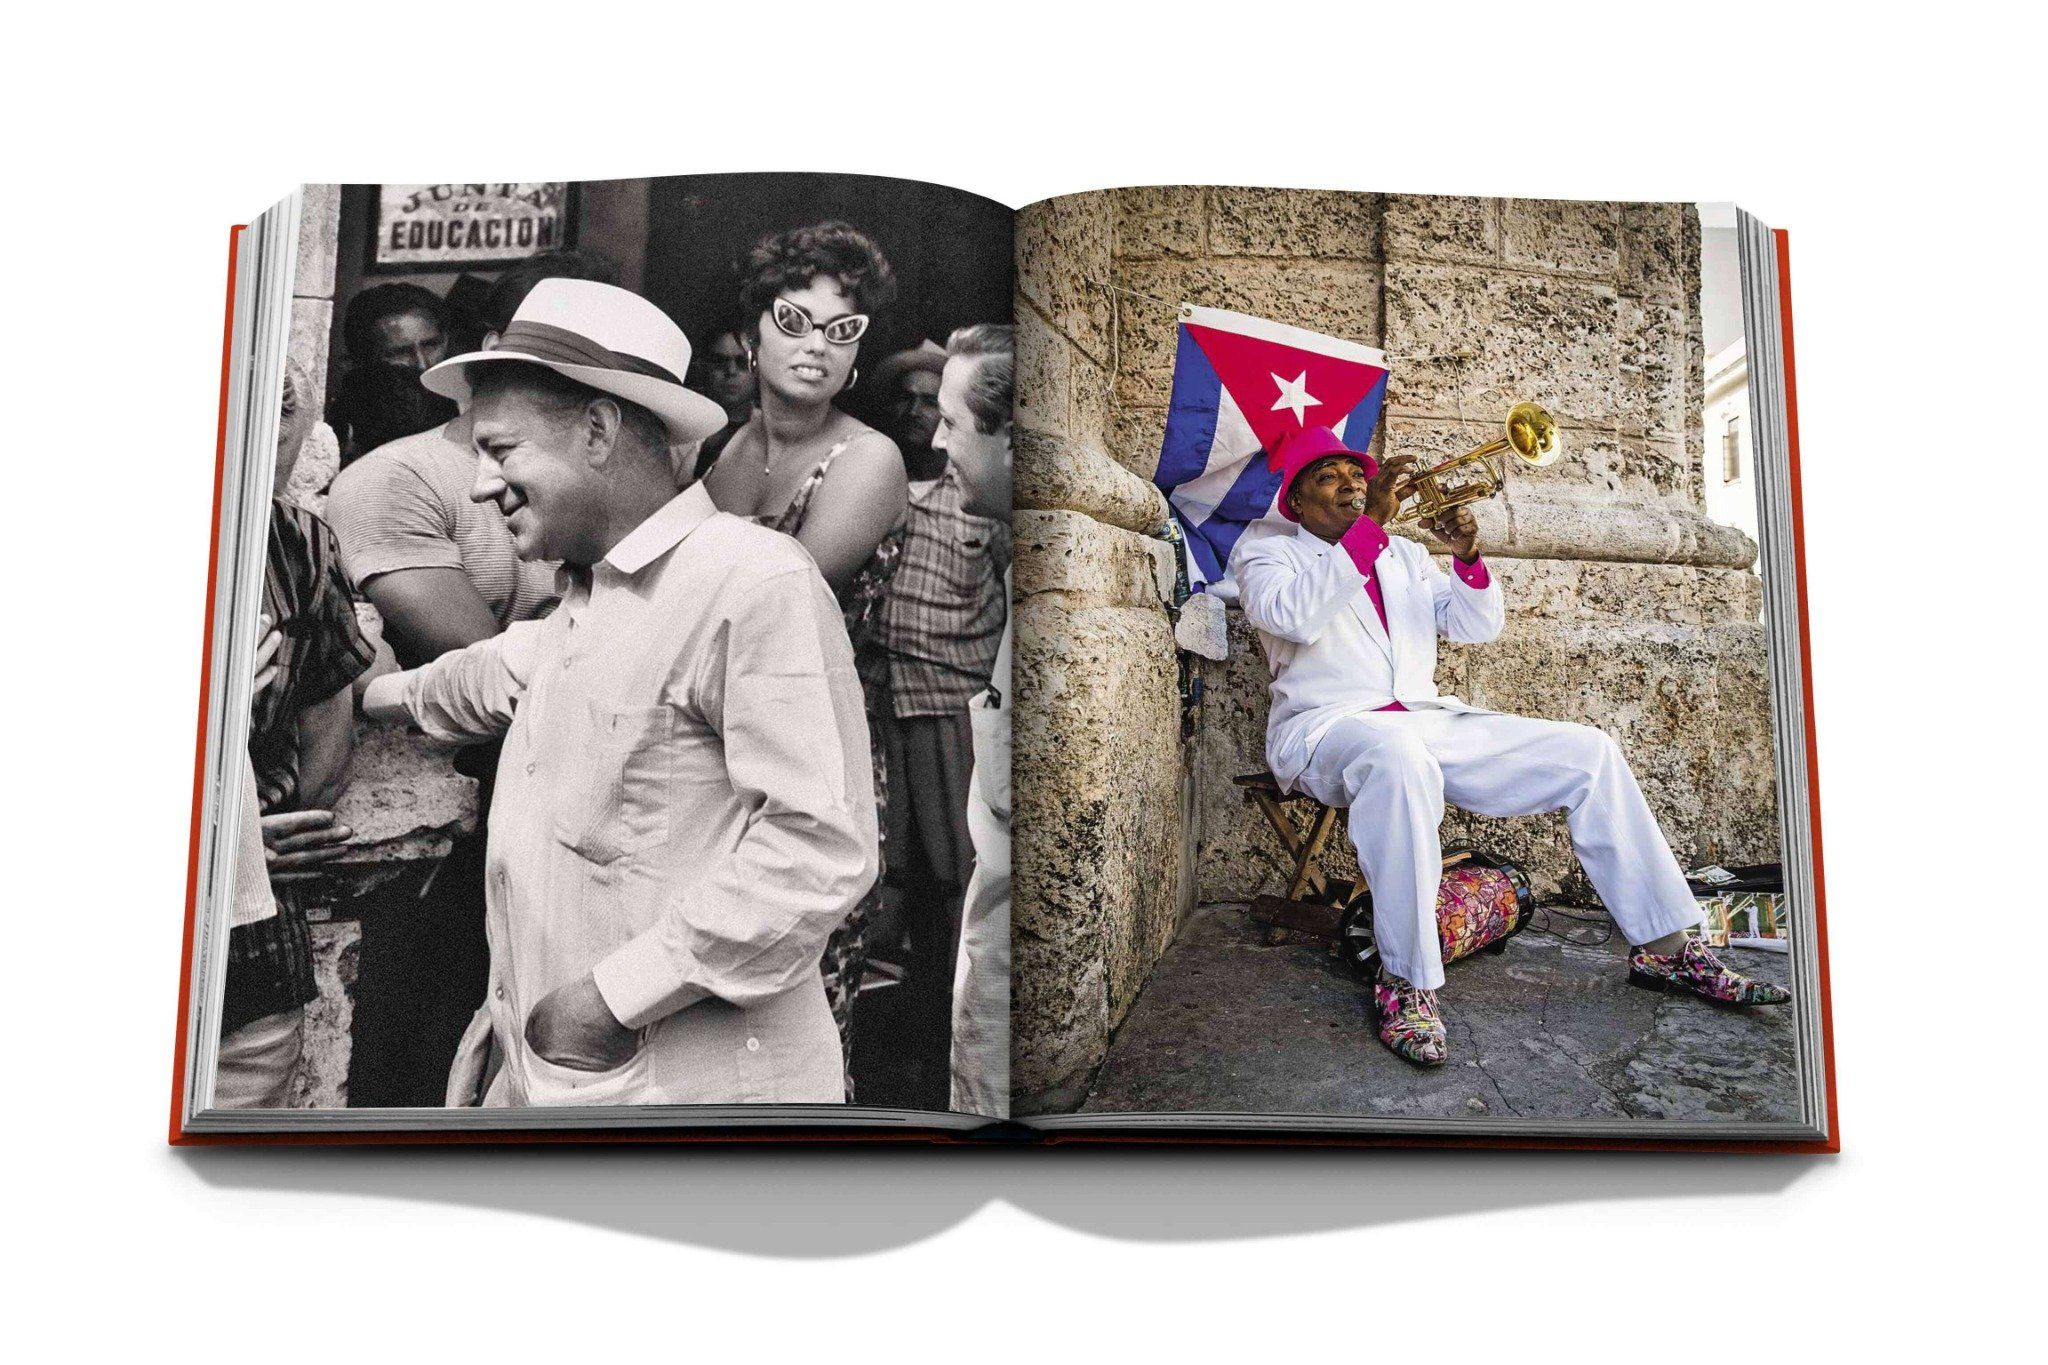  Havana Blues_Pamela Ruiz_9781649800046_Assouline Publishing Inc 